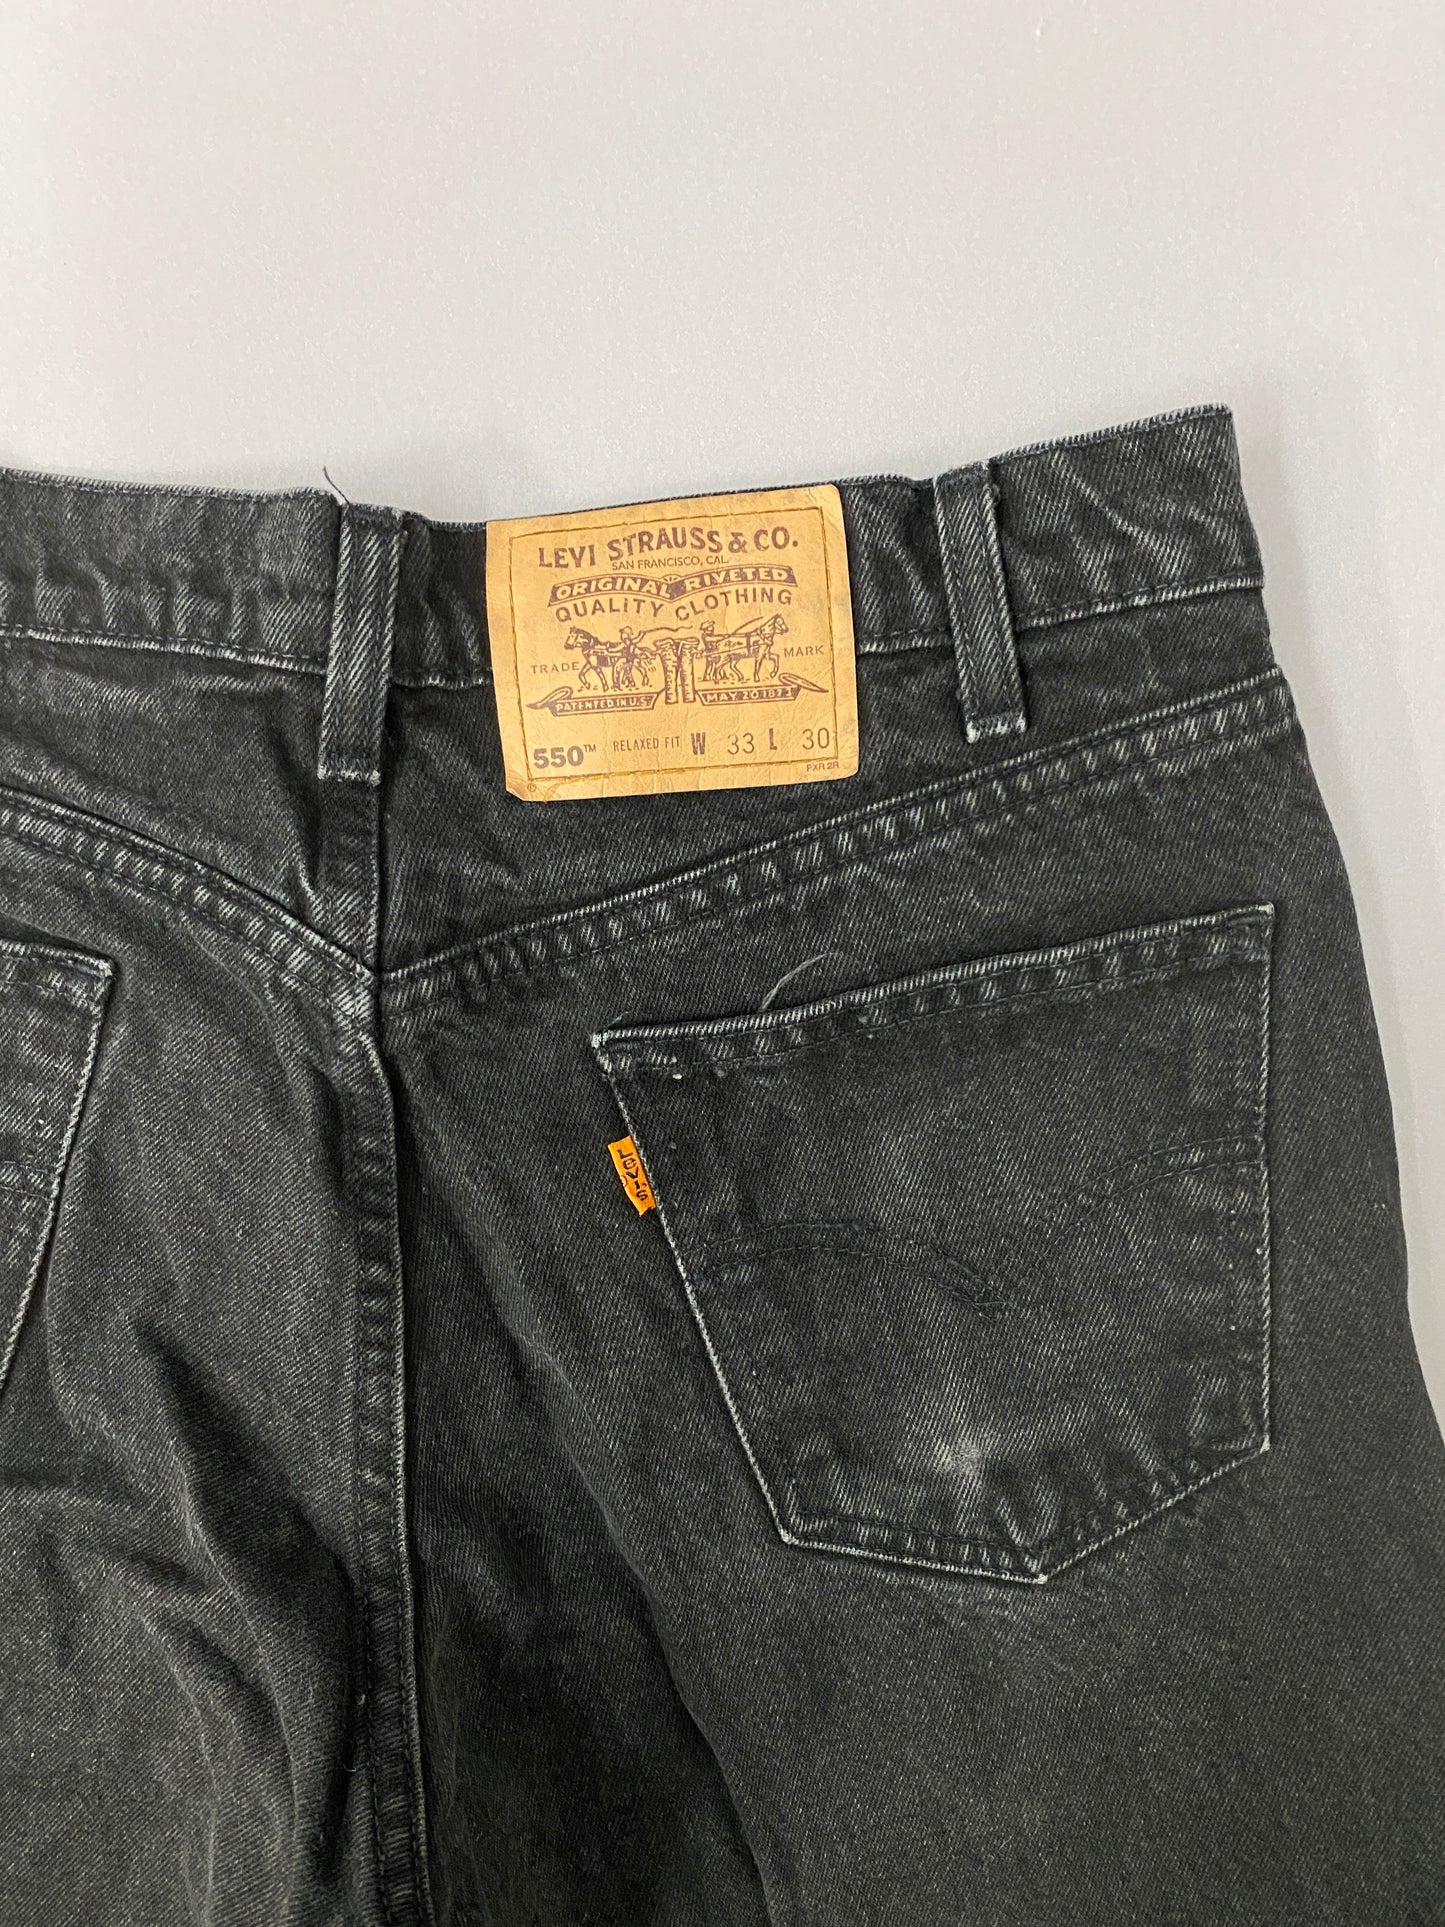 Jeans Levis Orange Tab - 33 x 30